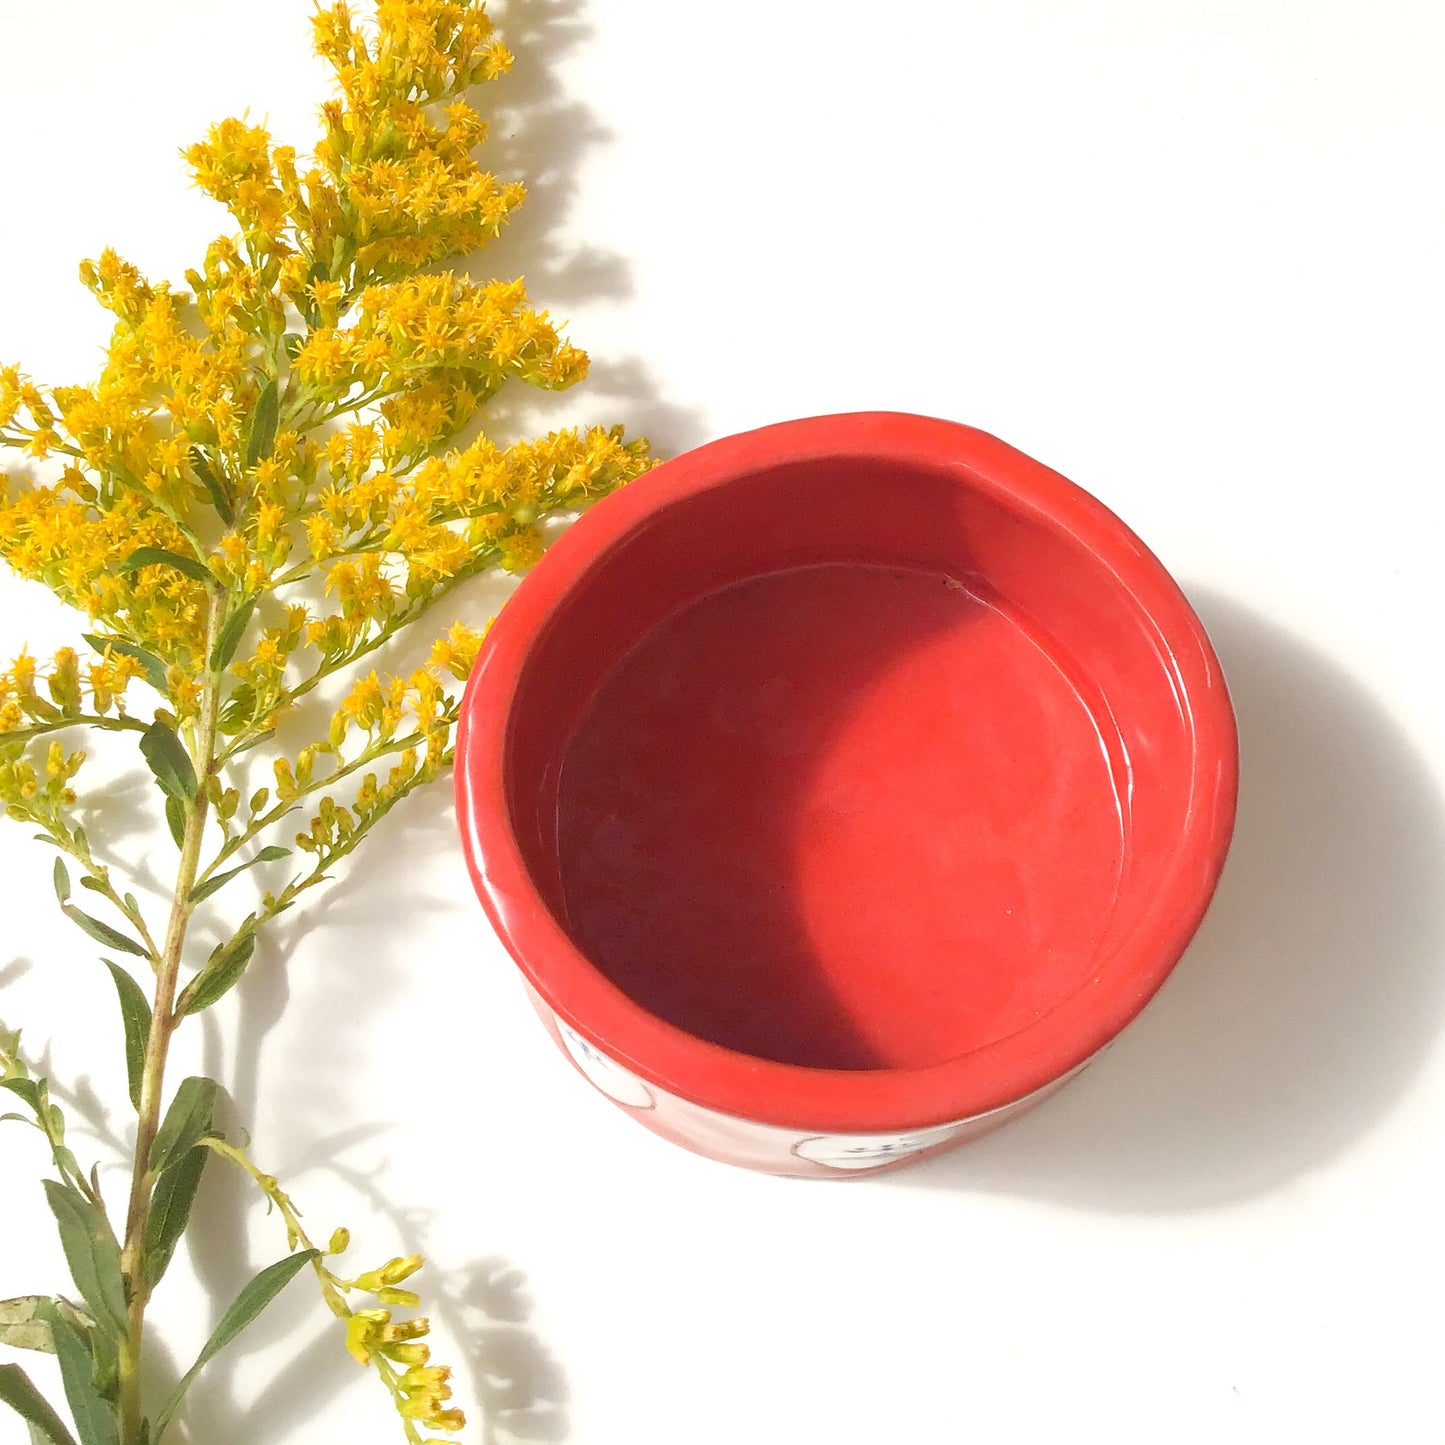 Red & White Pot with Blue Floral Design - Decorative Ceramic Vessel